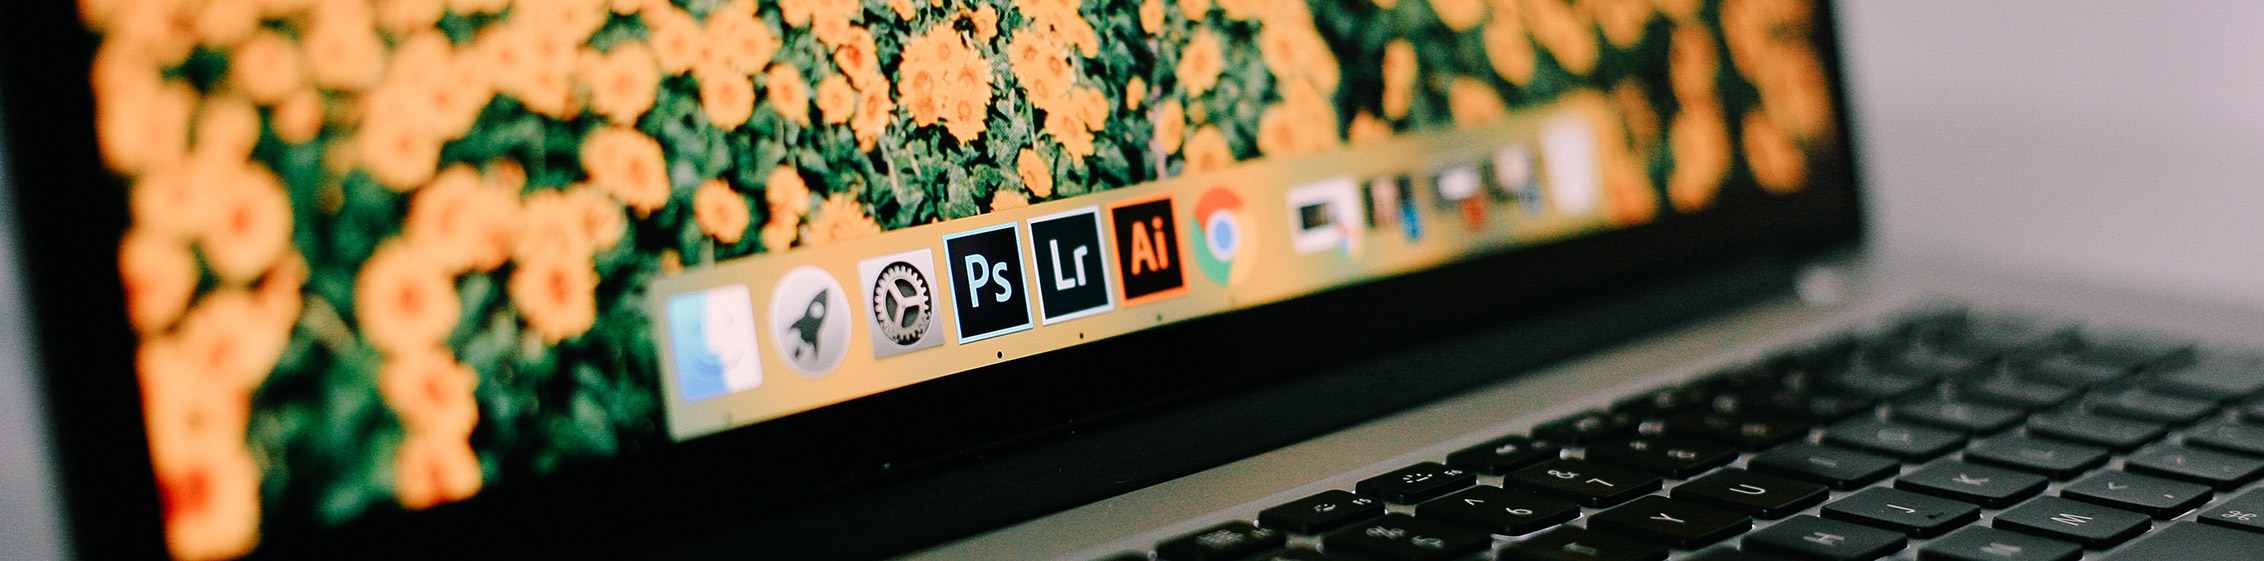 8 Ways To Use Adobe Illustrator To Improve Your Blog